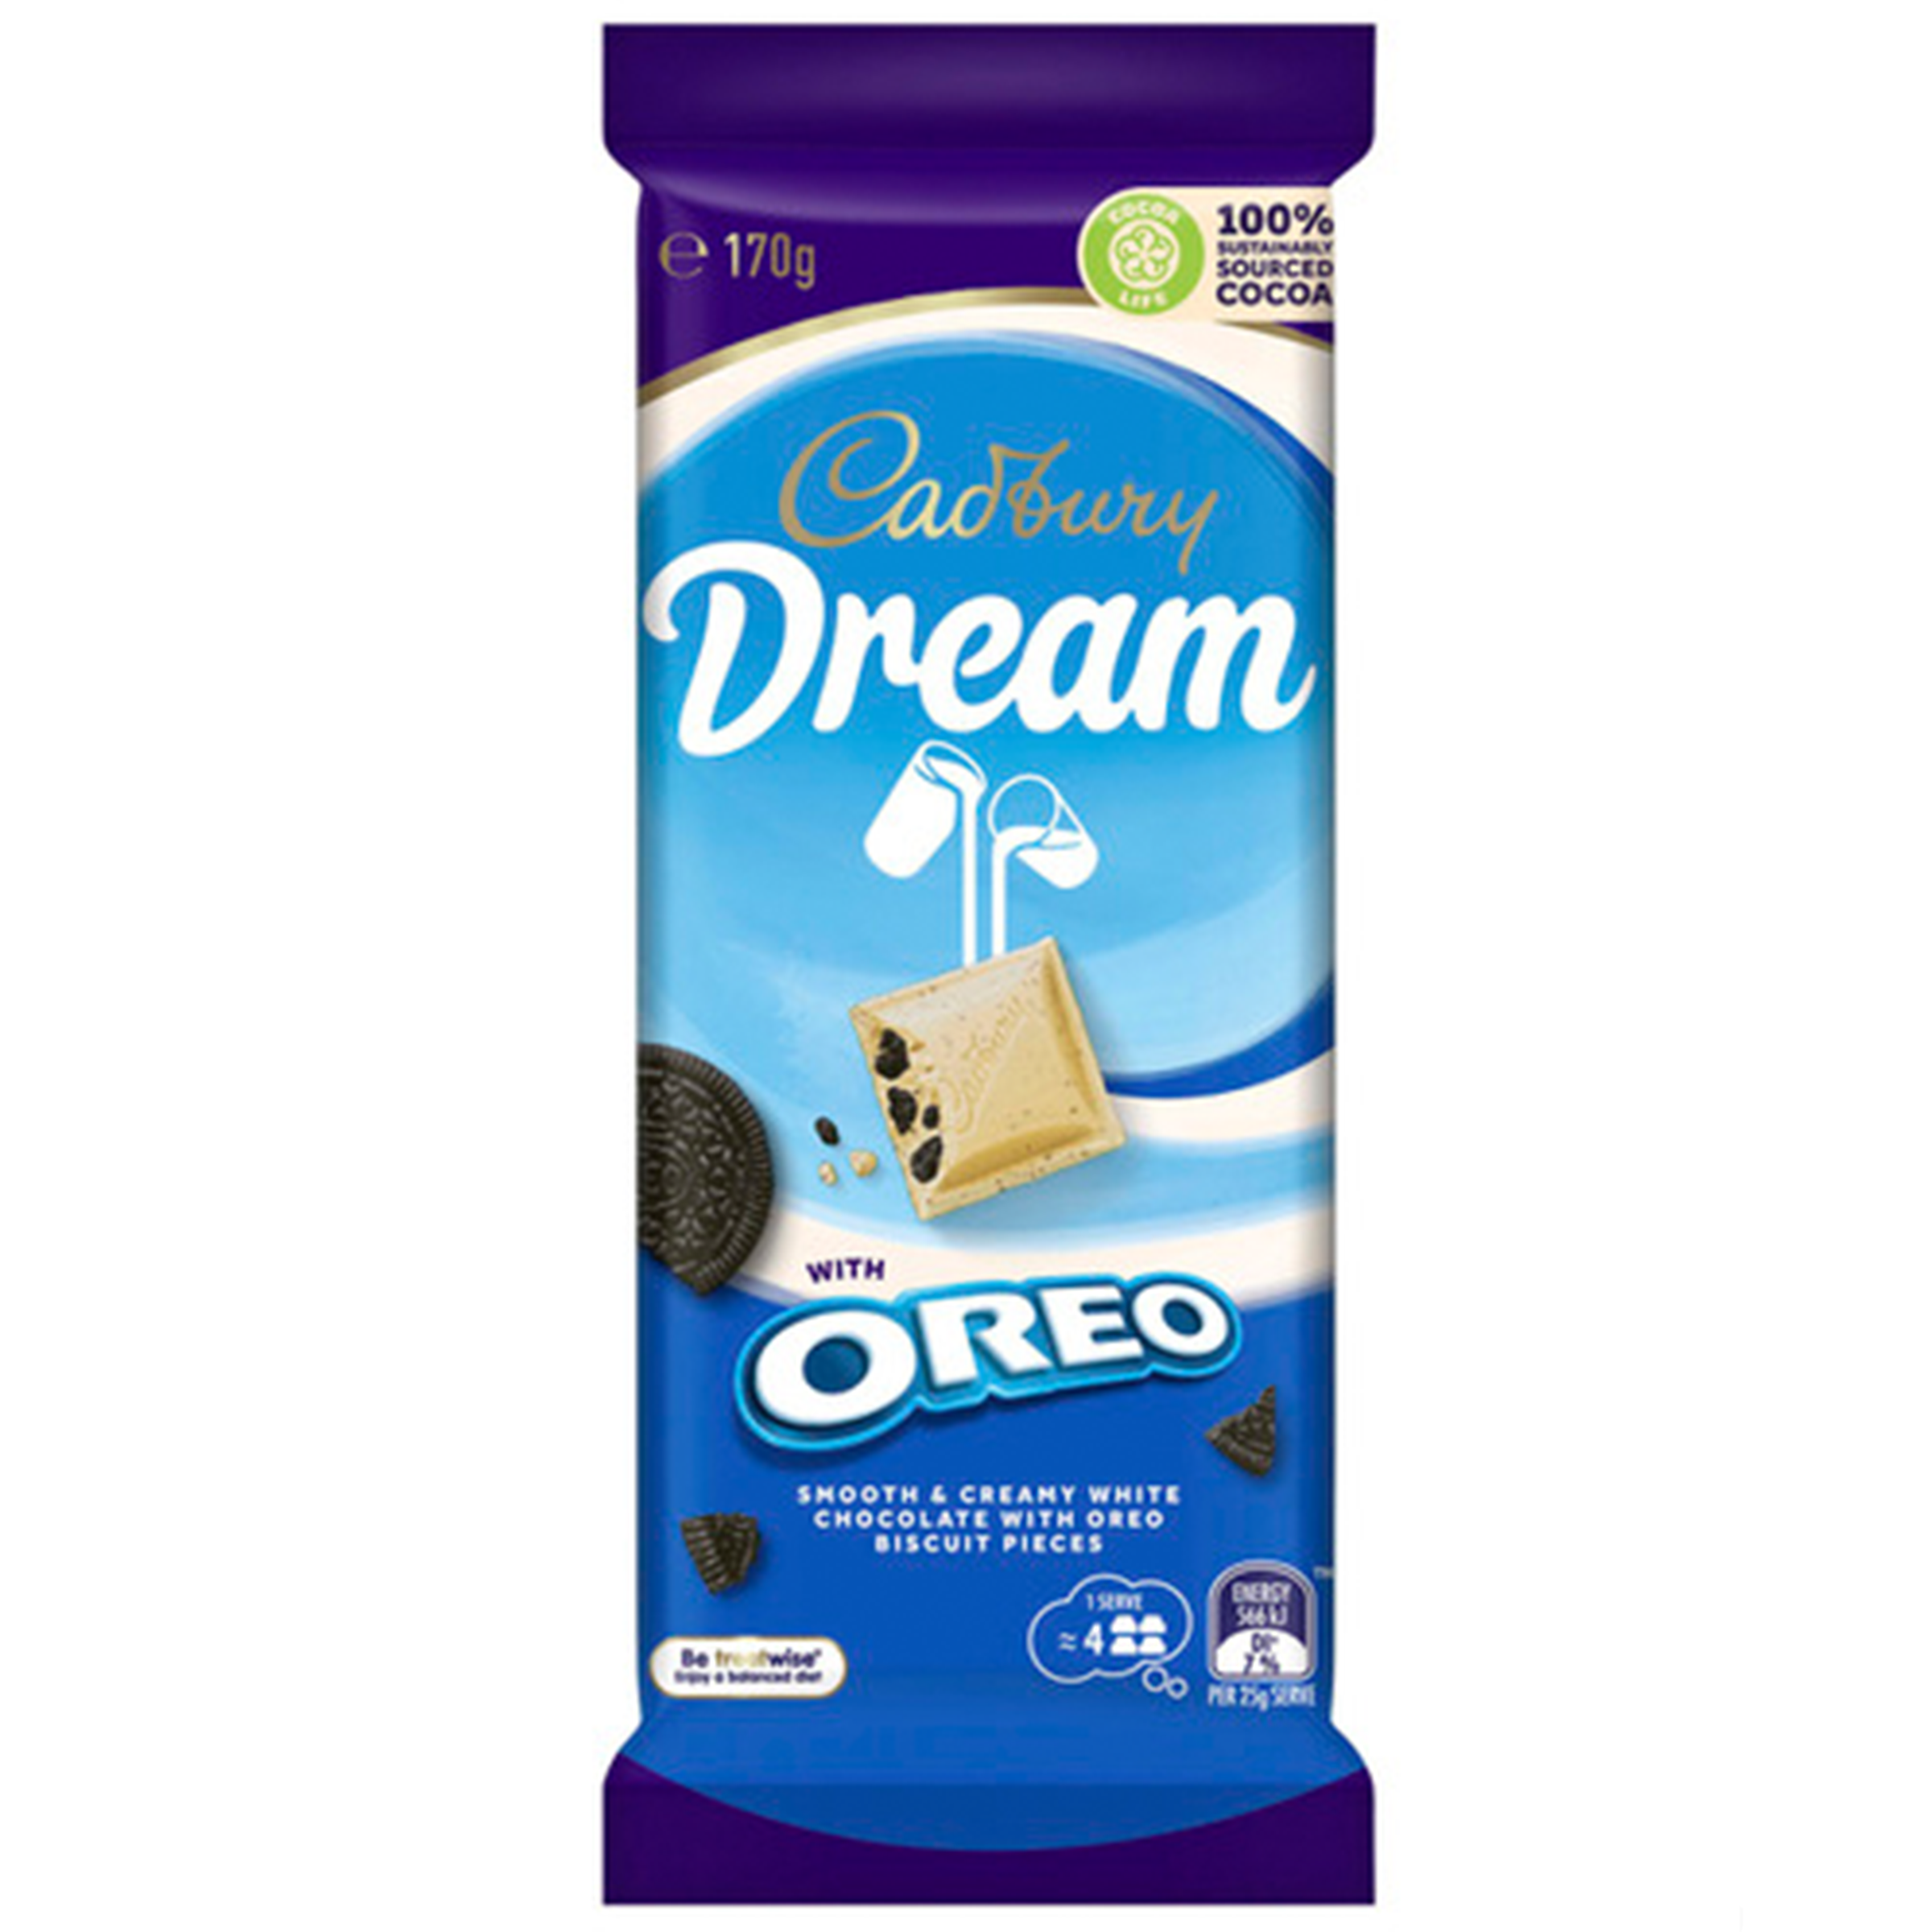 Cadbury Dream Oreo - Australia